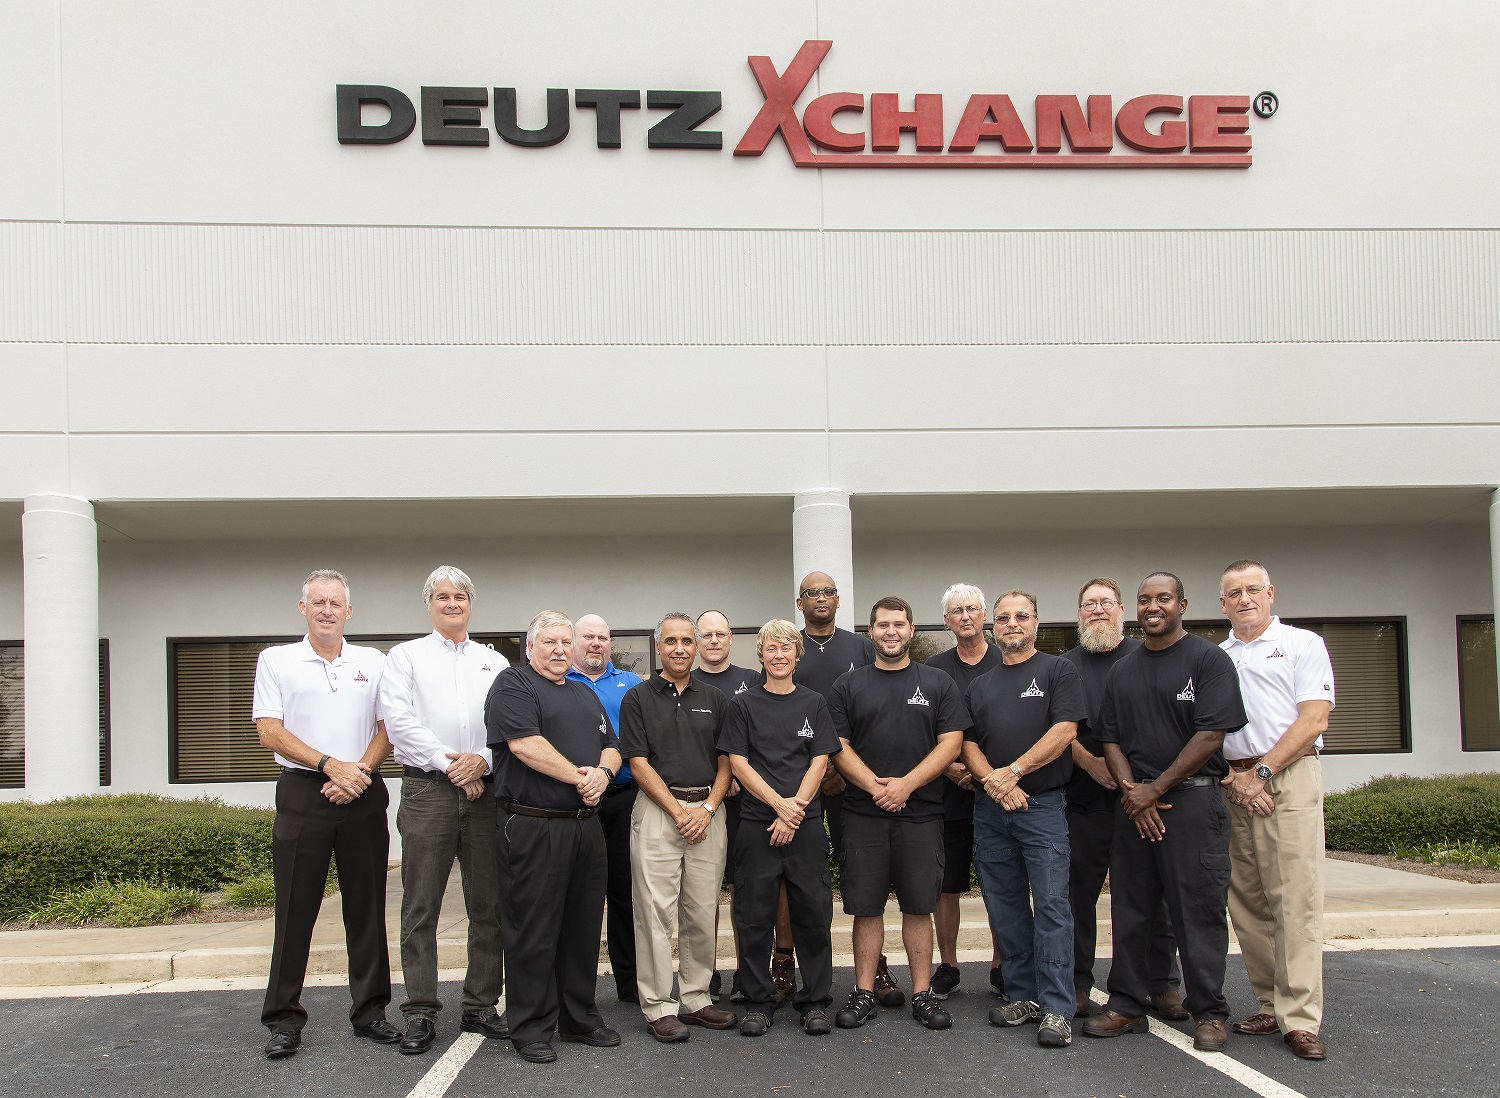 Original DEUTZ Xchange team members, who are still with DEUTZ Xchange.